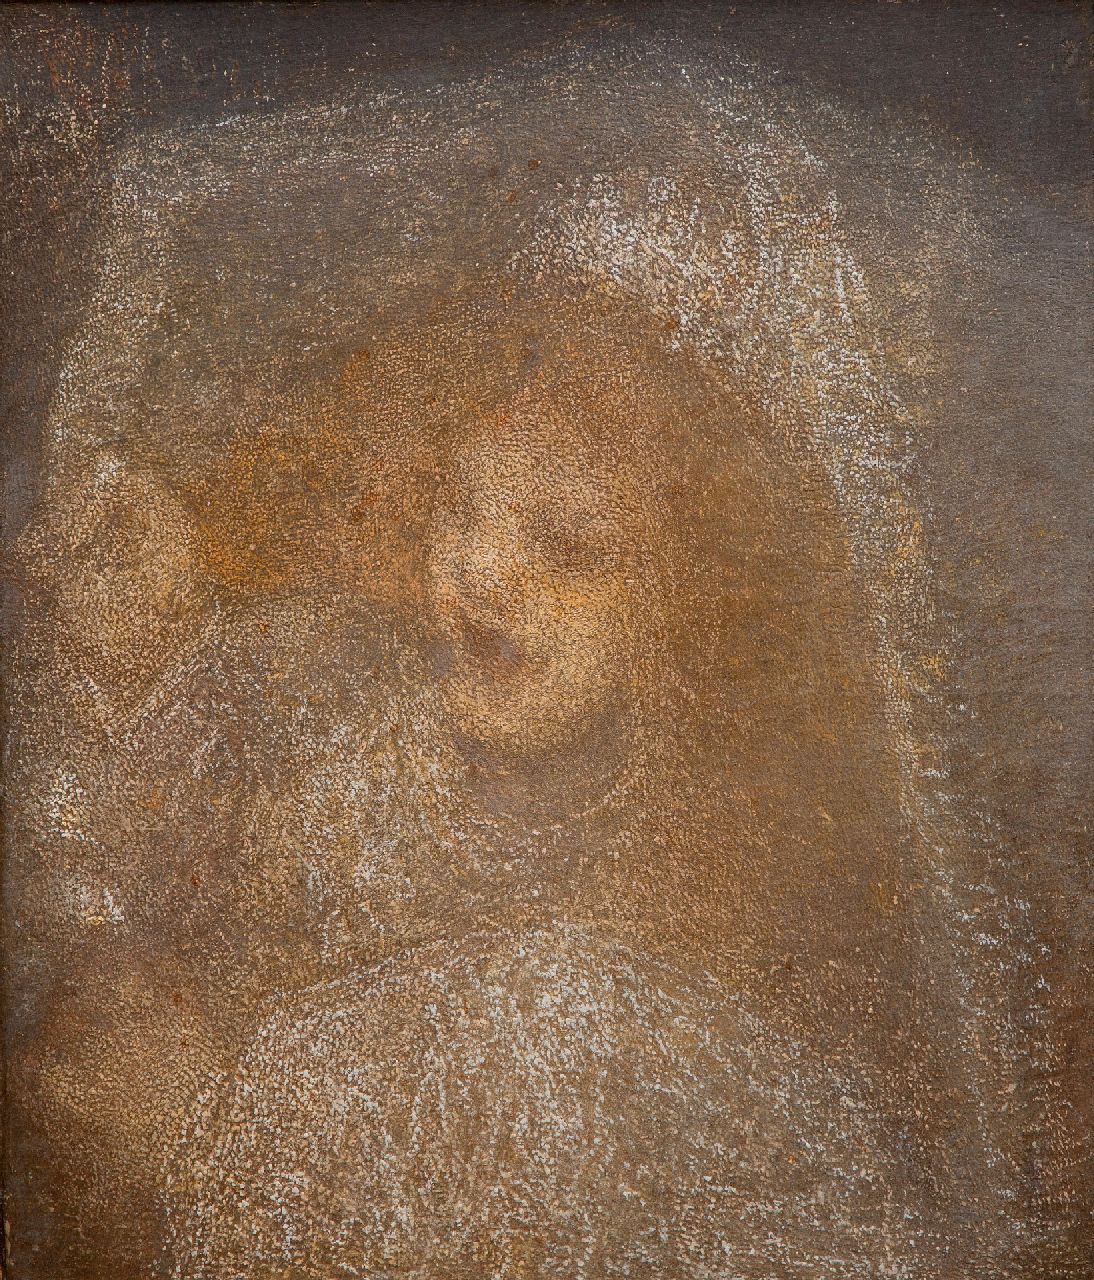 Matthijs Maris | The bridal veil, oil on canvas, 66.5 x 57.5 cm, painted ca. 1905-1915